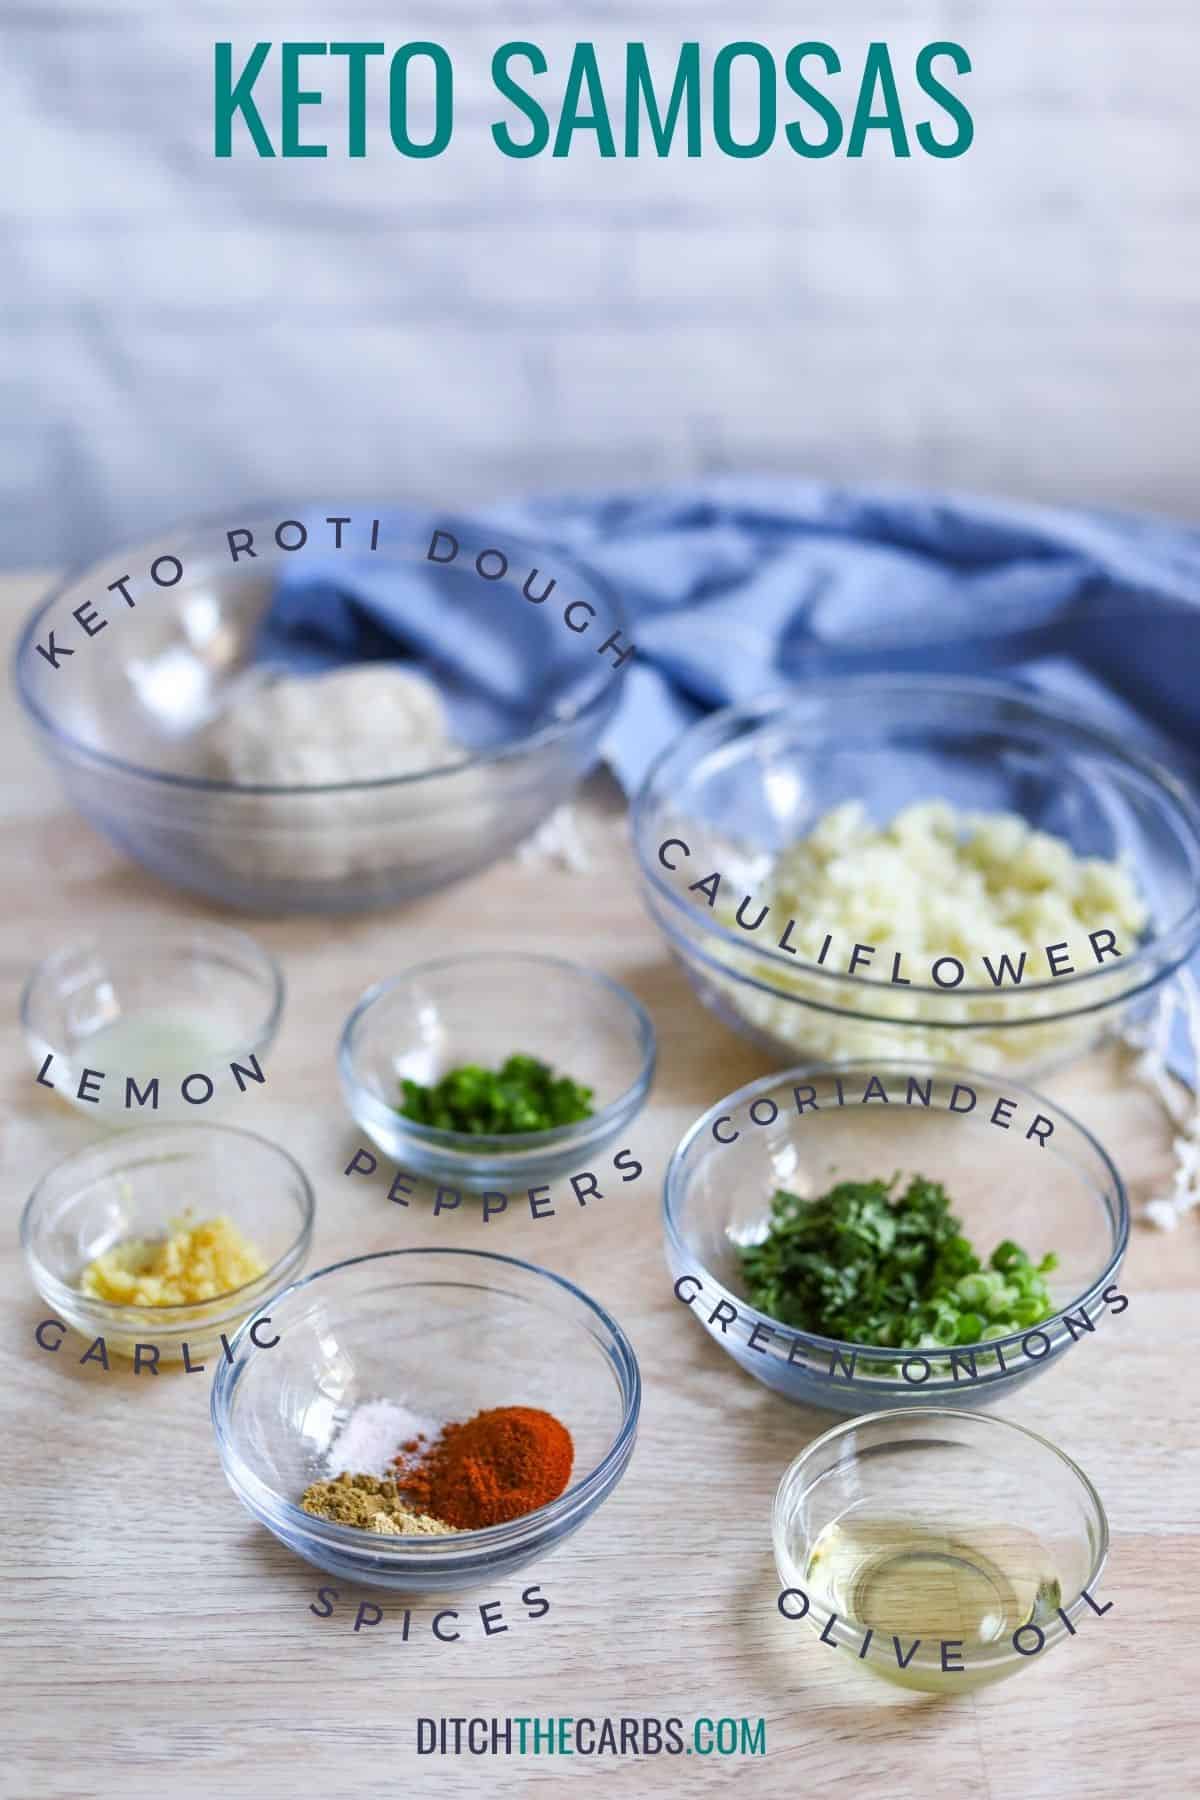 Ingredients needed to make keto samosas - cauliflower, lemon, garlic, spices, fresh herbs, oil, dough.